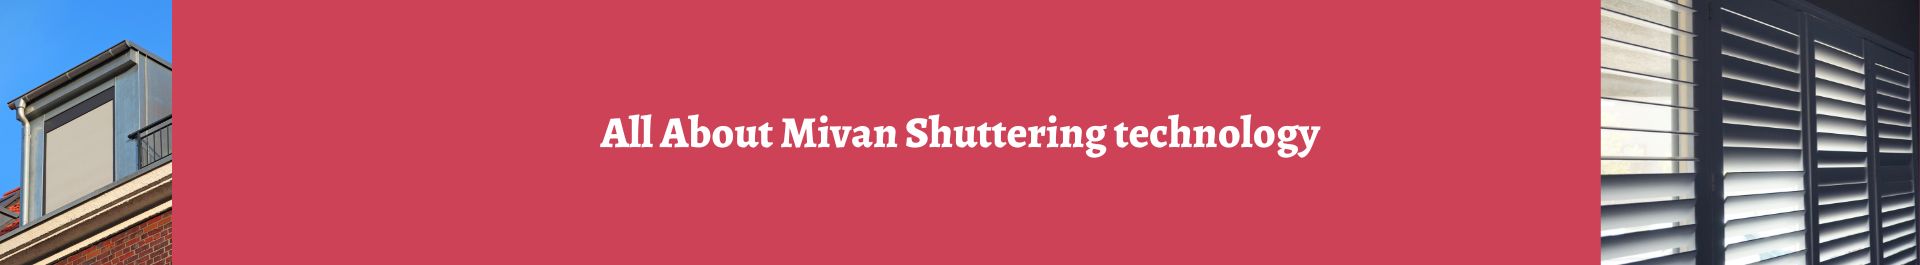 All About Mivan Shuttering technology - Deal Acres